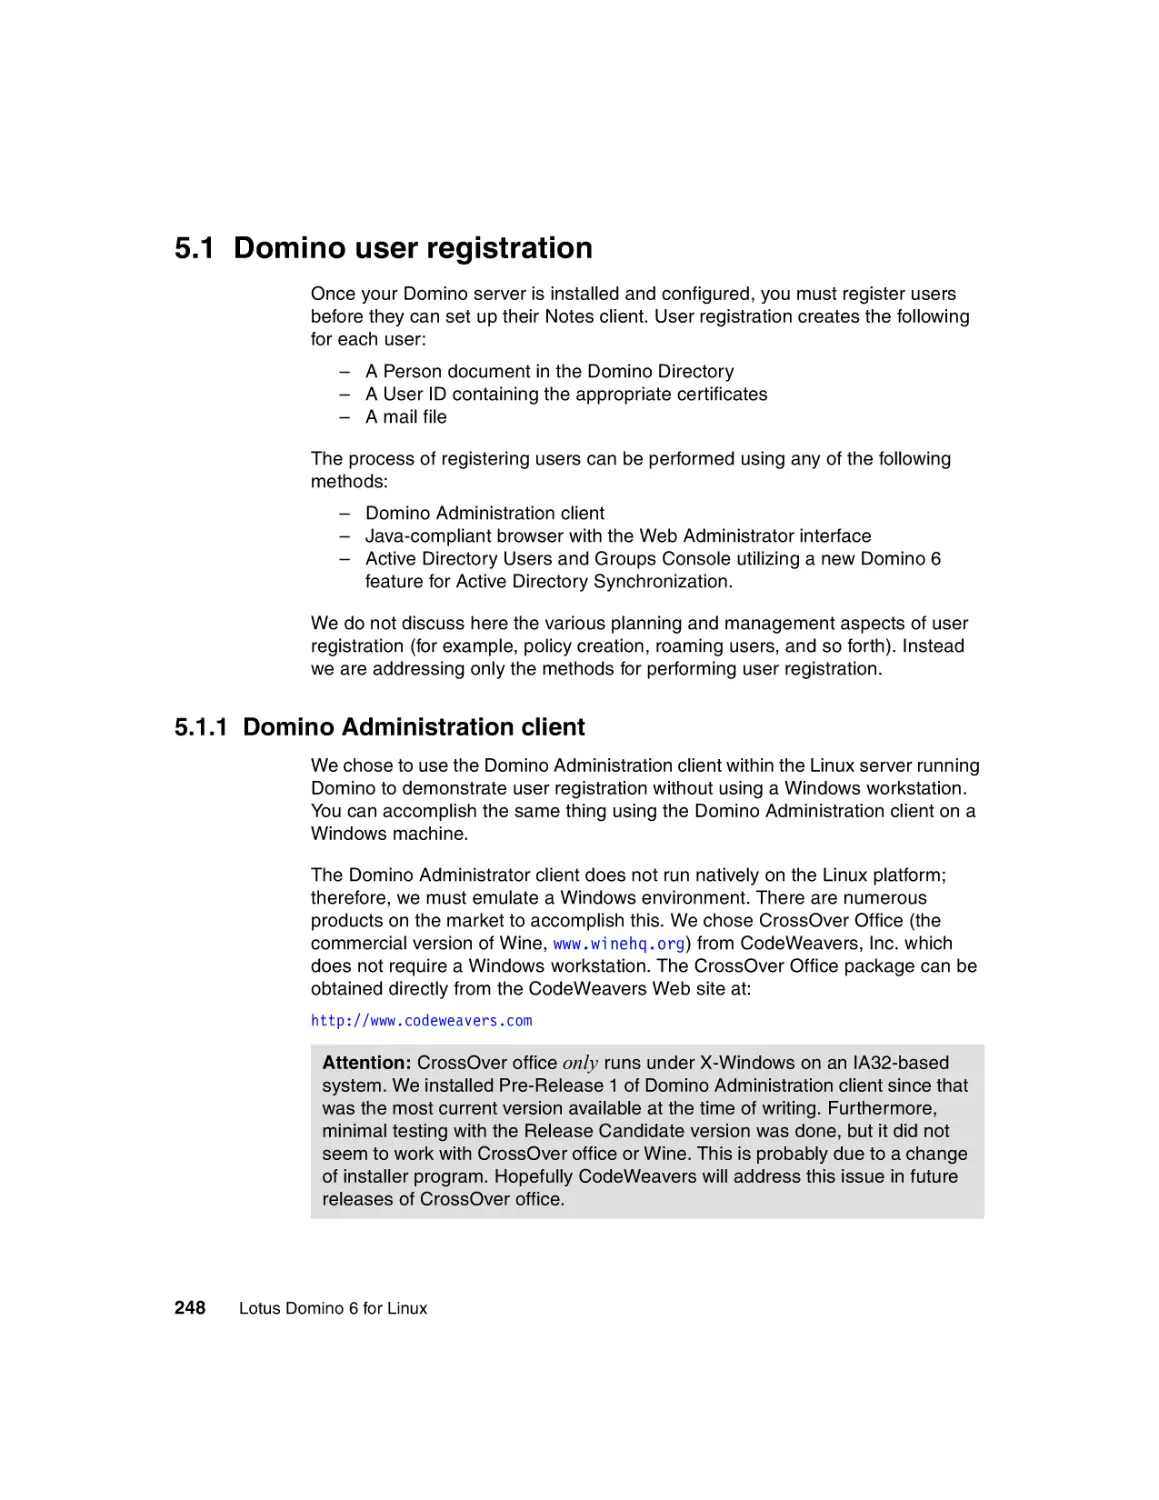 5.1 Domino user registration
5.1.1 Domino Administration client